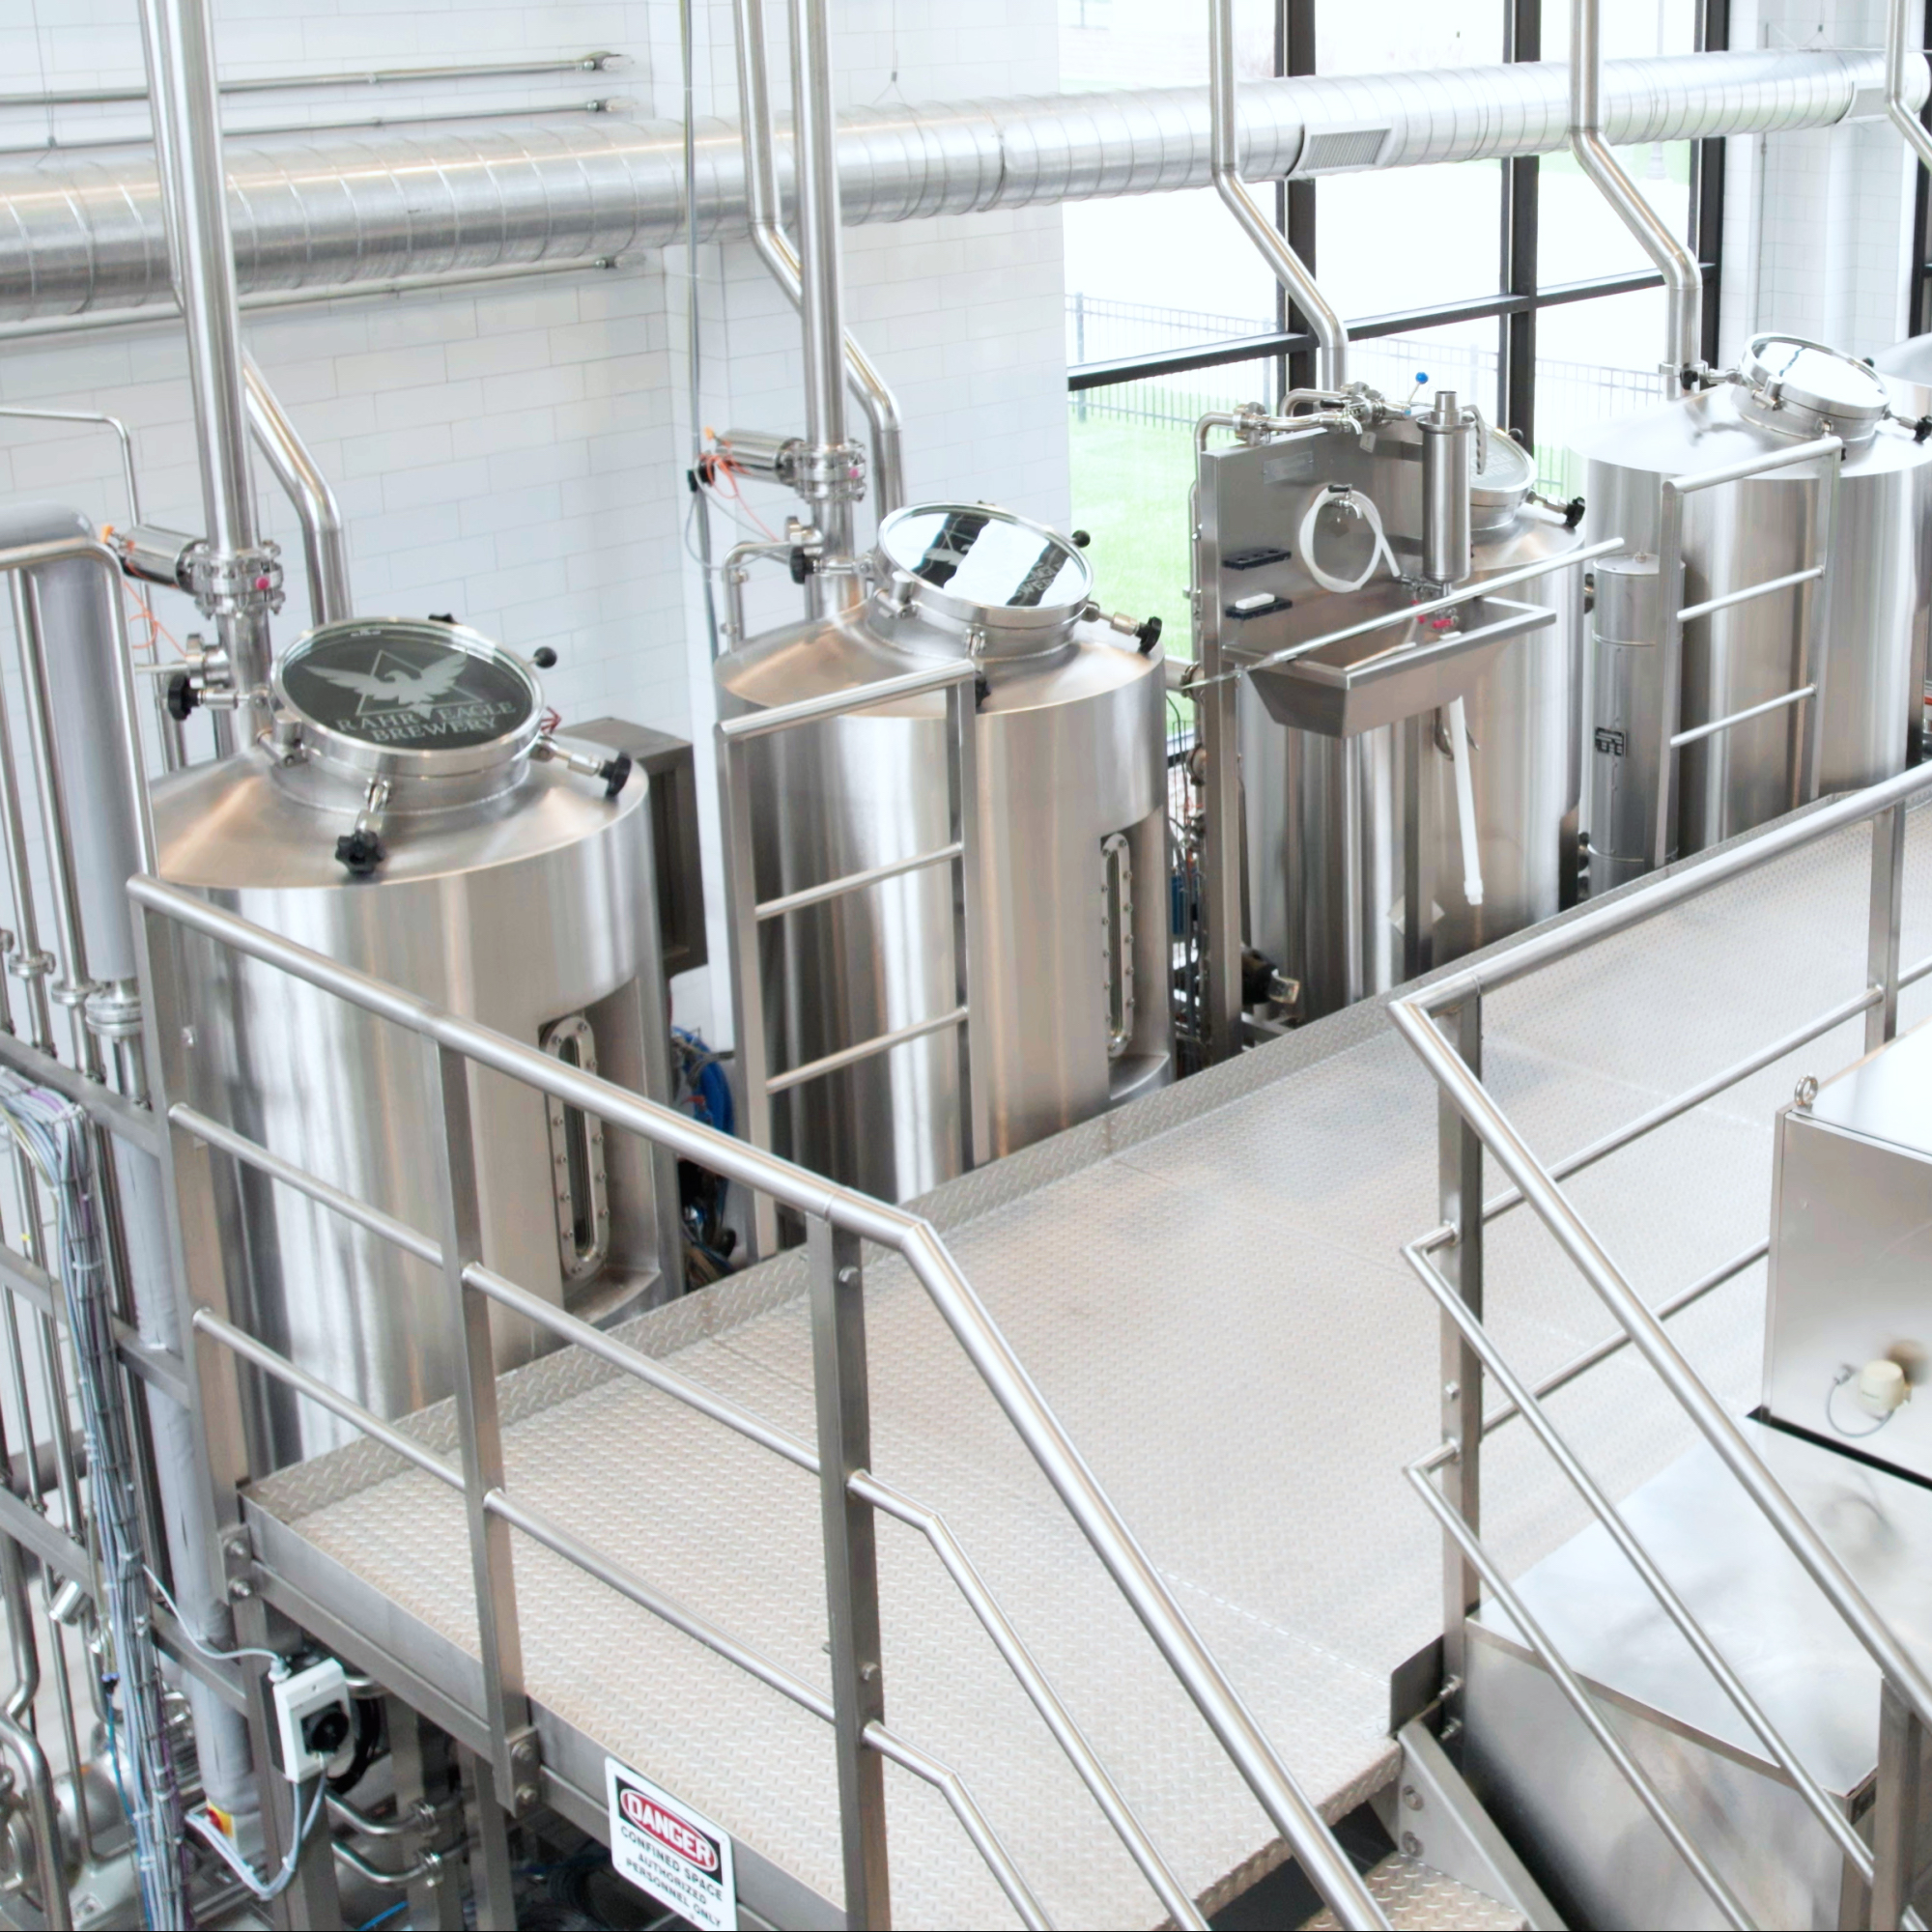 Rahr Eagle Brewery's 2.5 bbl Esau & Huber brewing system